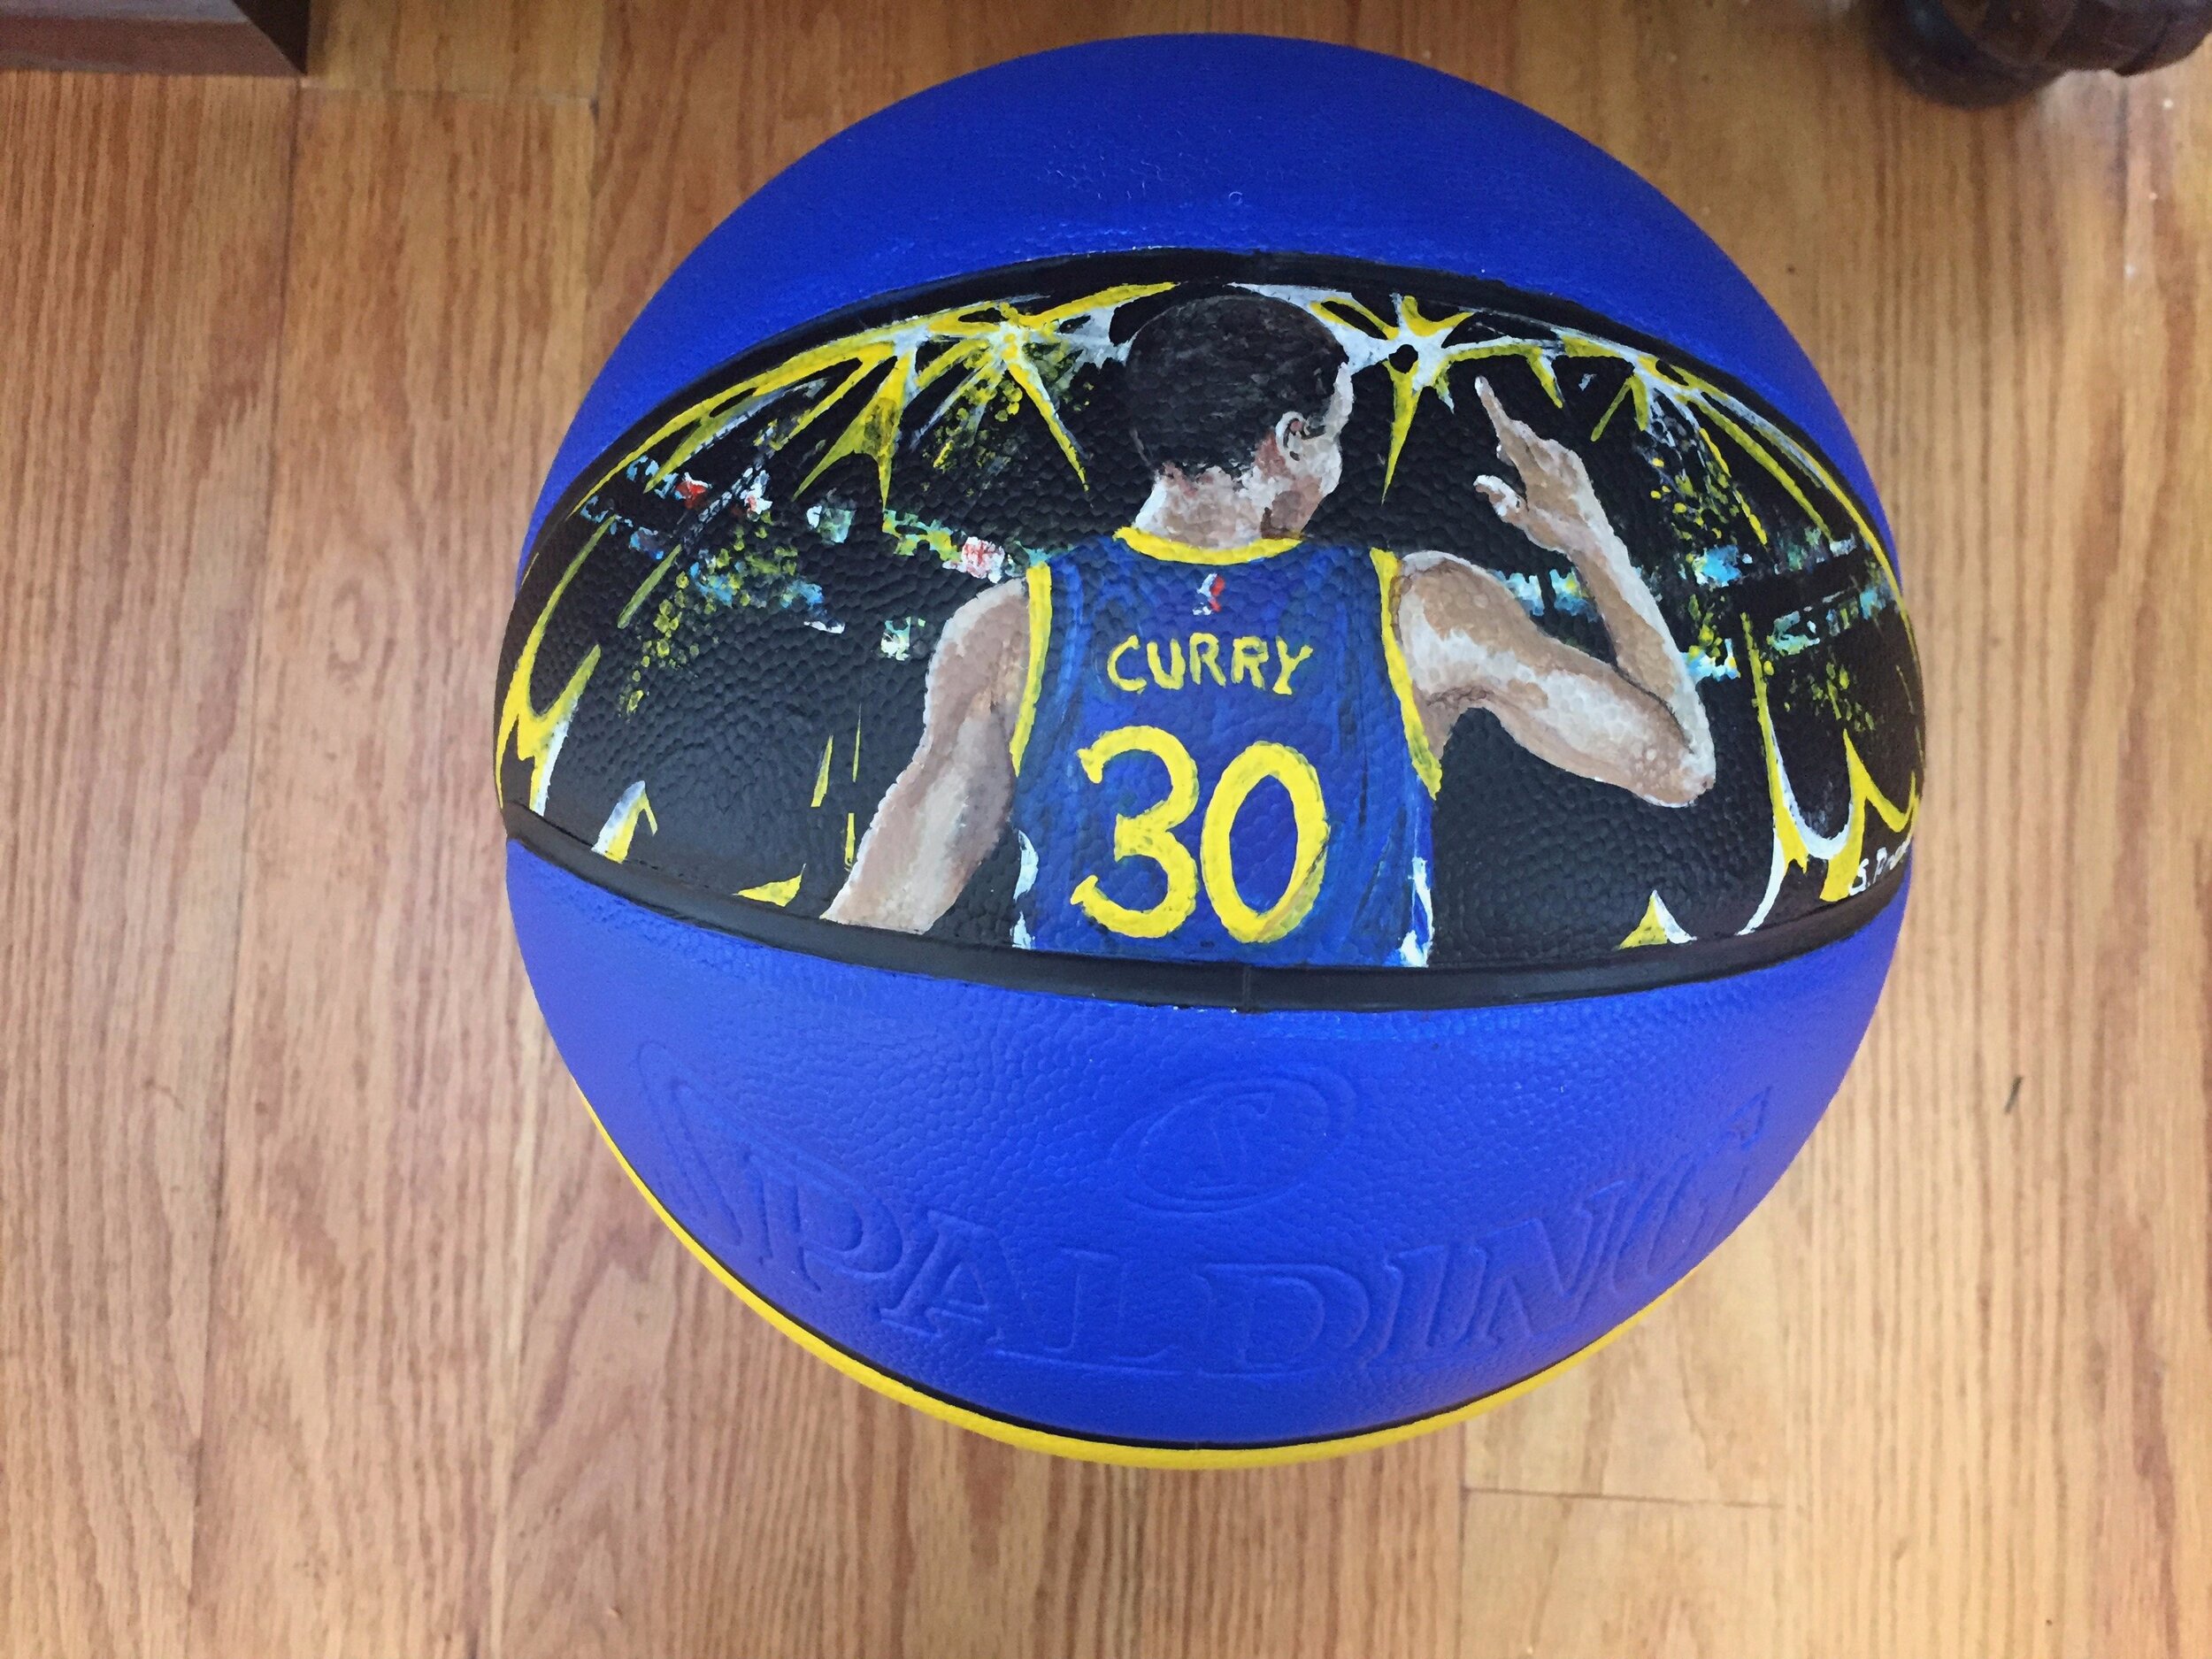 Curry Basketball Portrait